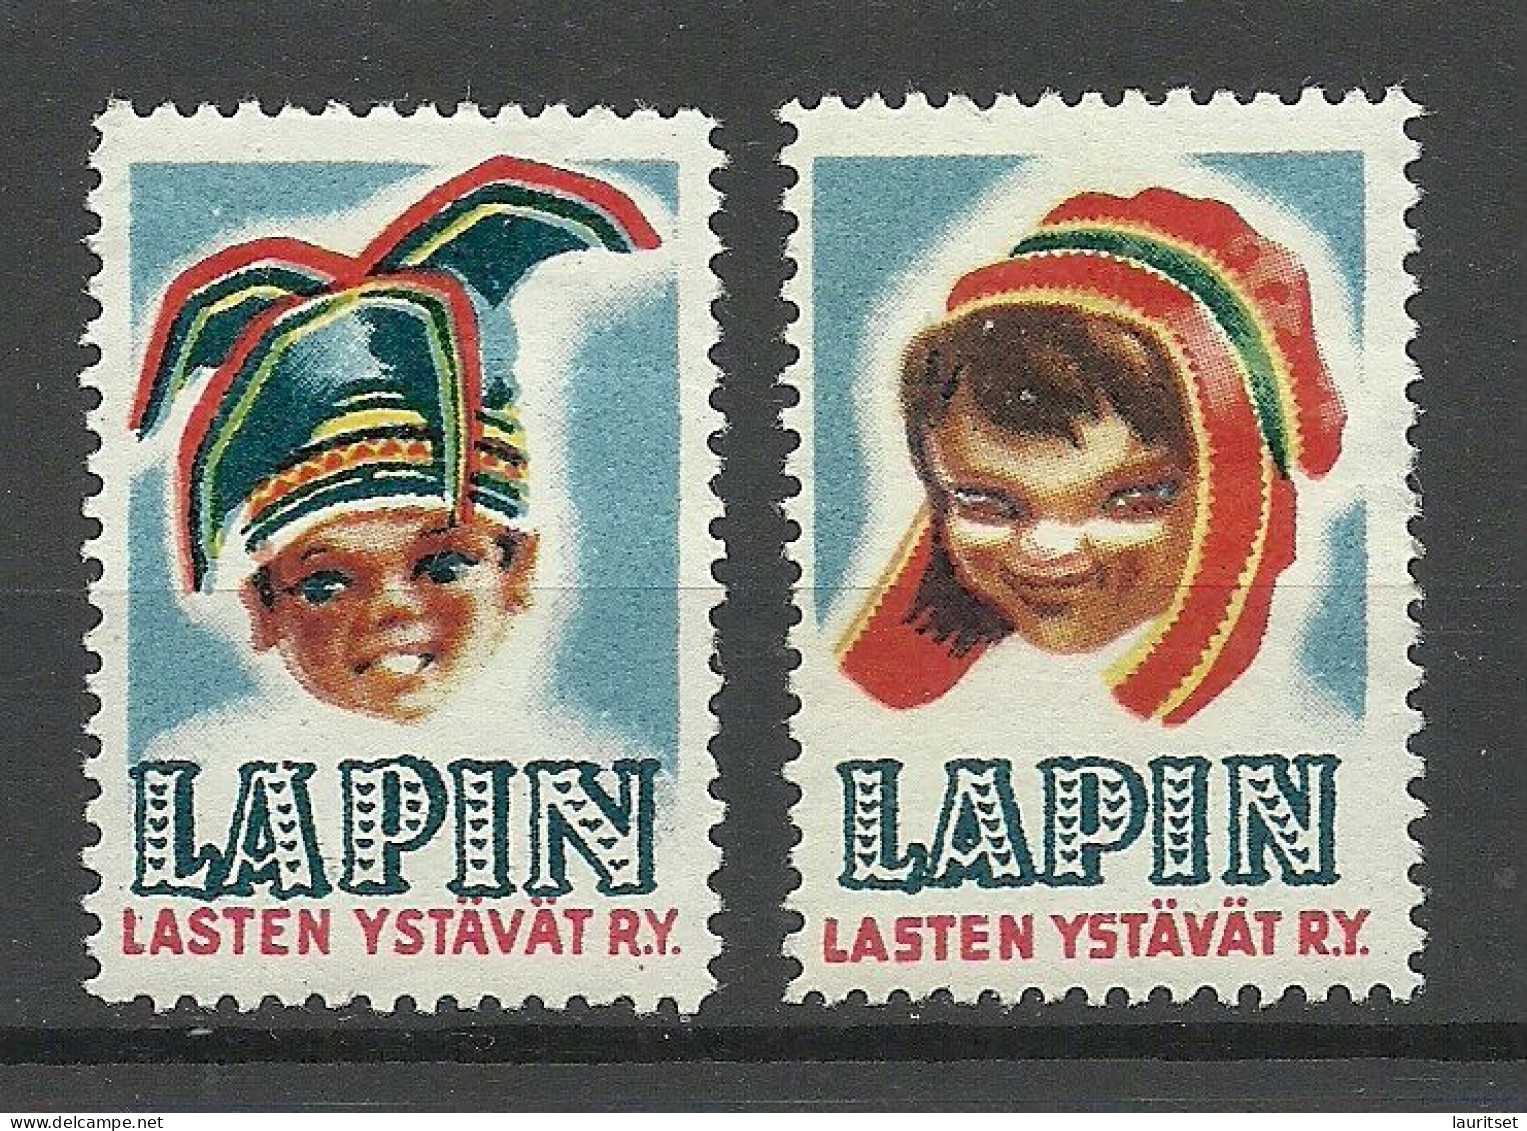 FINLAND FINNLAND For Lapi Children Propaganda Vignette Poster Stamp Kinderhilfe, 2 Vignettes * - Erinnophilie